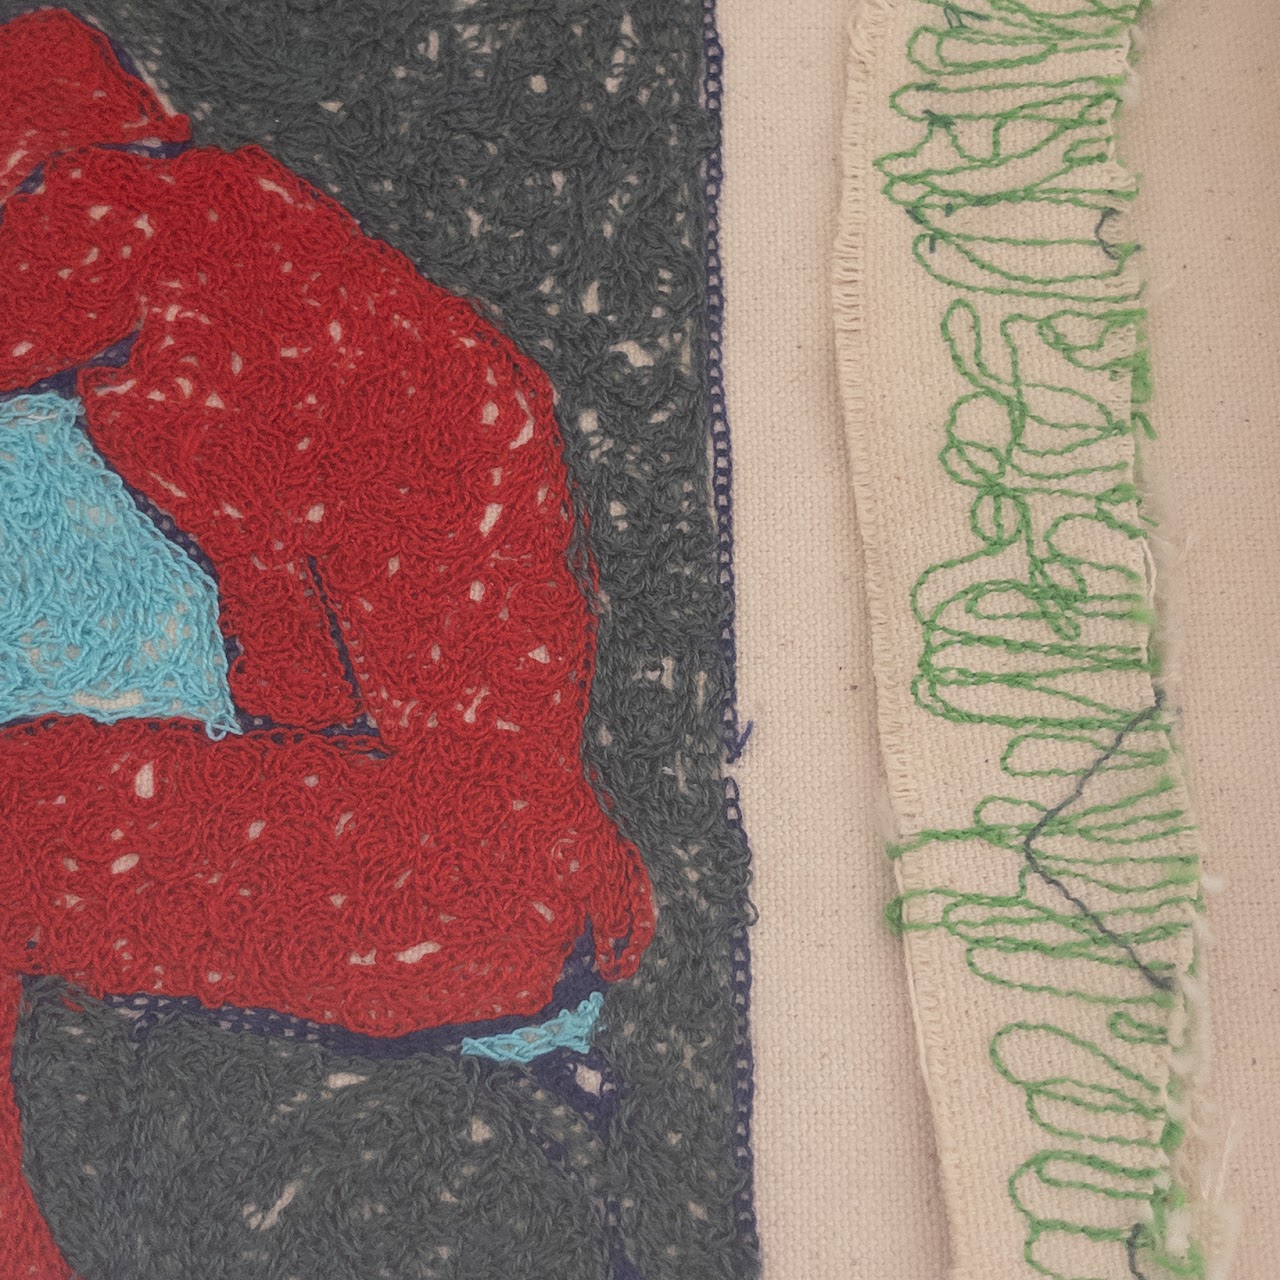 Joel Handorff 'Bijoux Boys - Seated Man (Red)' Embroidery Art